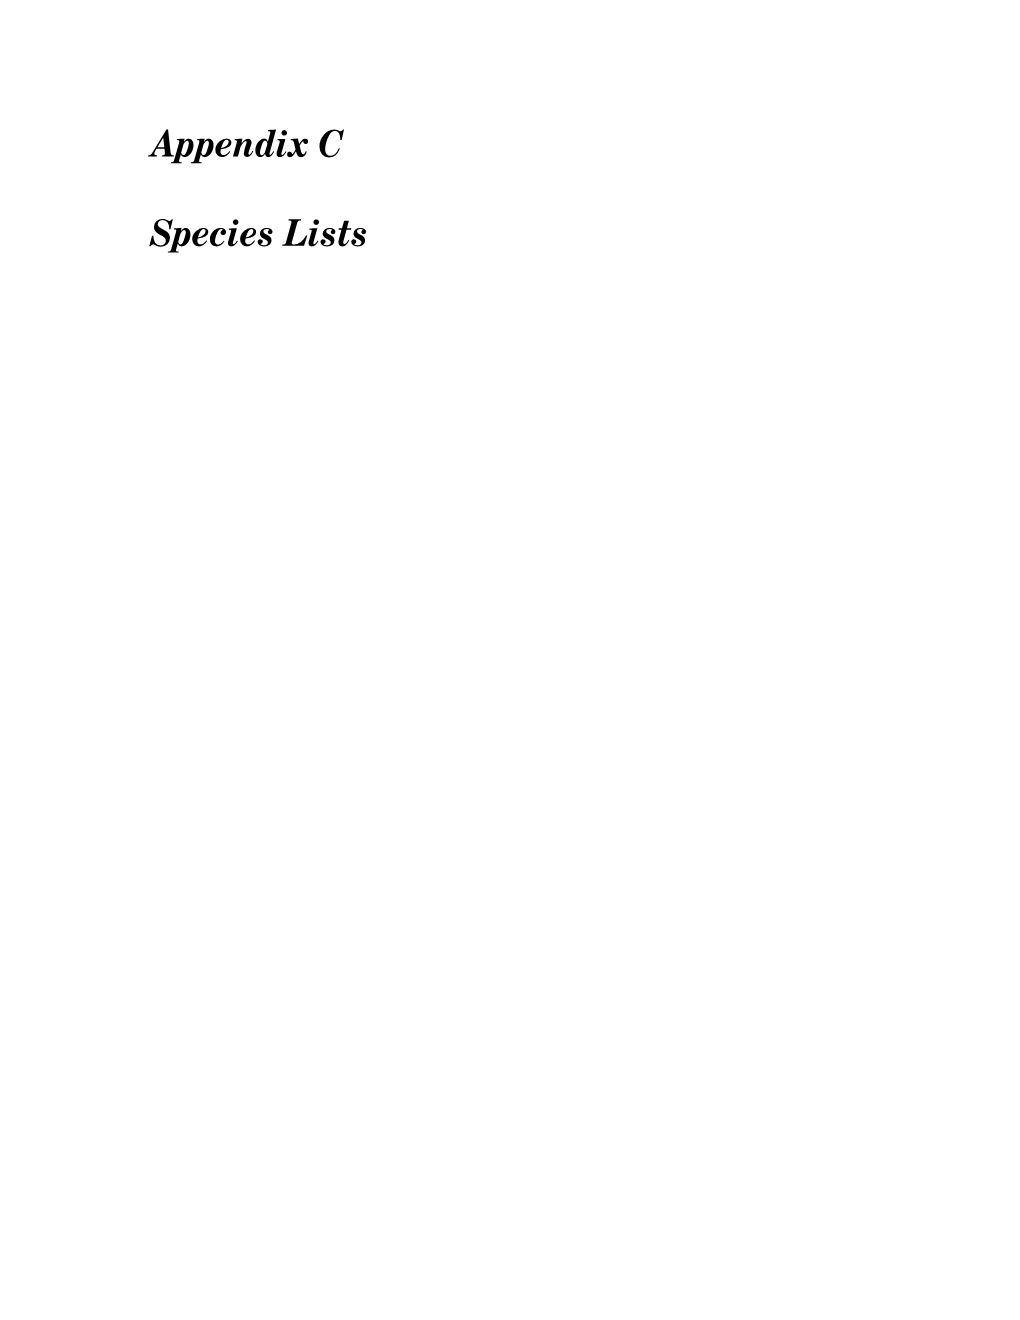 Appendix C Species Lists